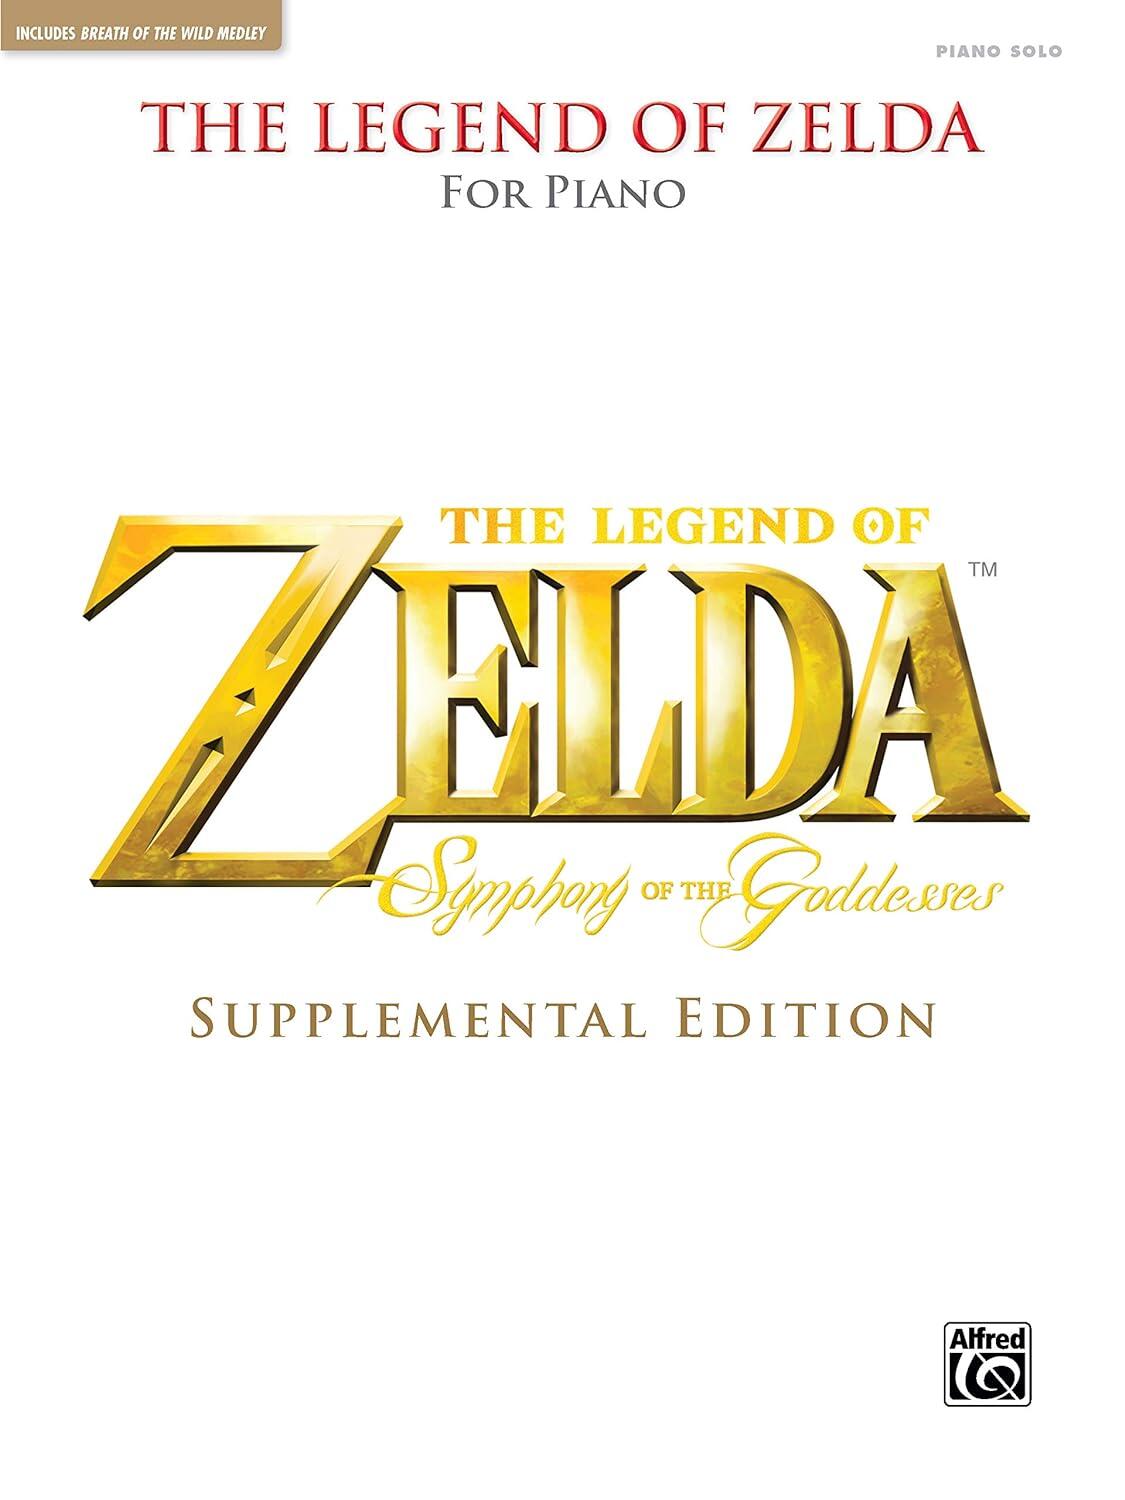 Zelda Symphony Of Goddess Supplement Edition : photo 1